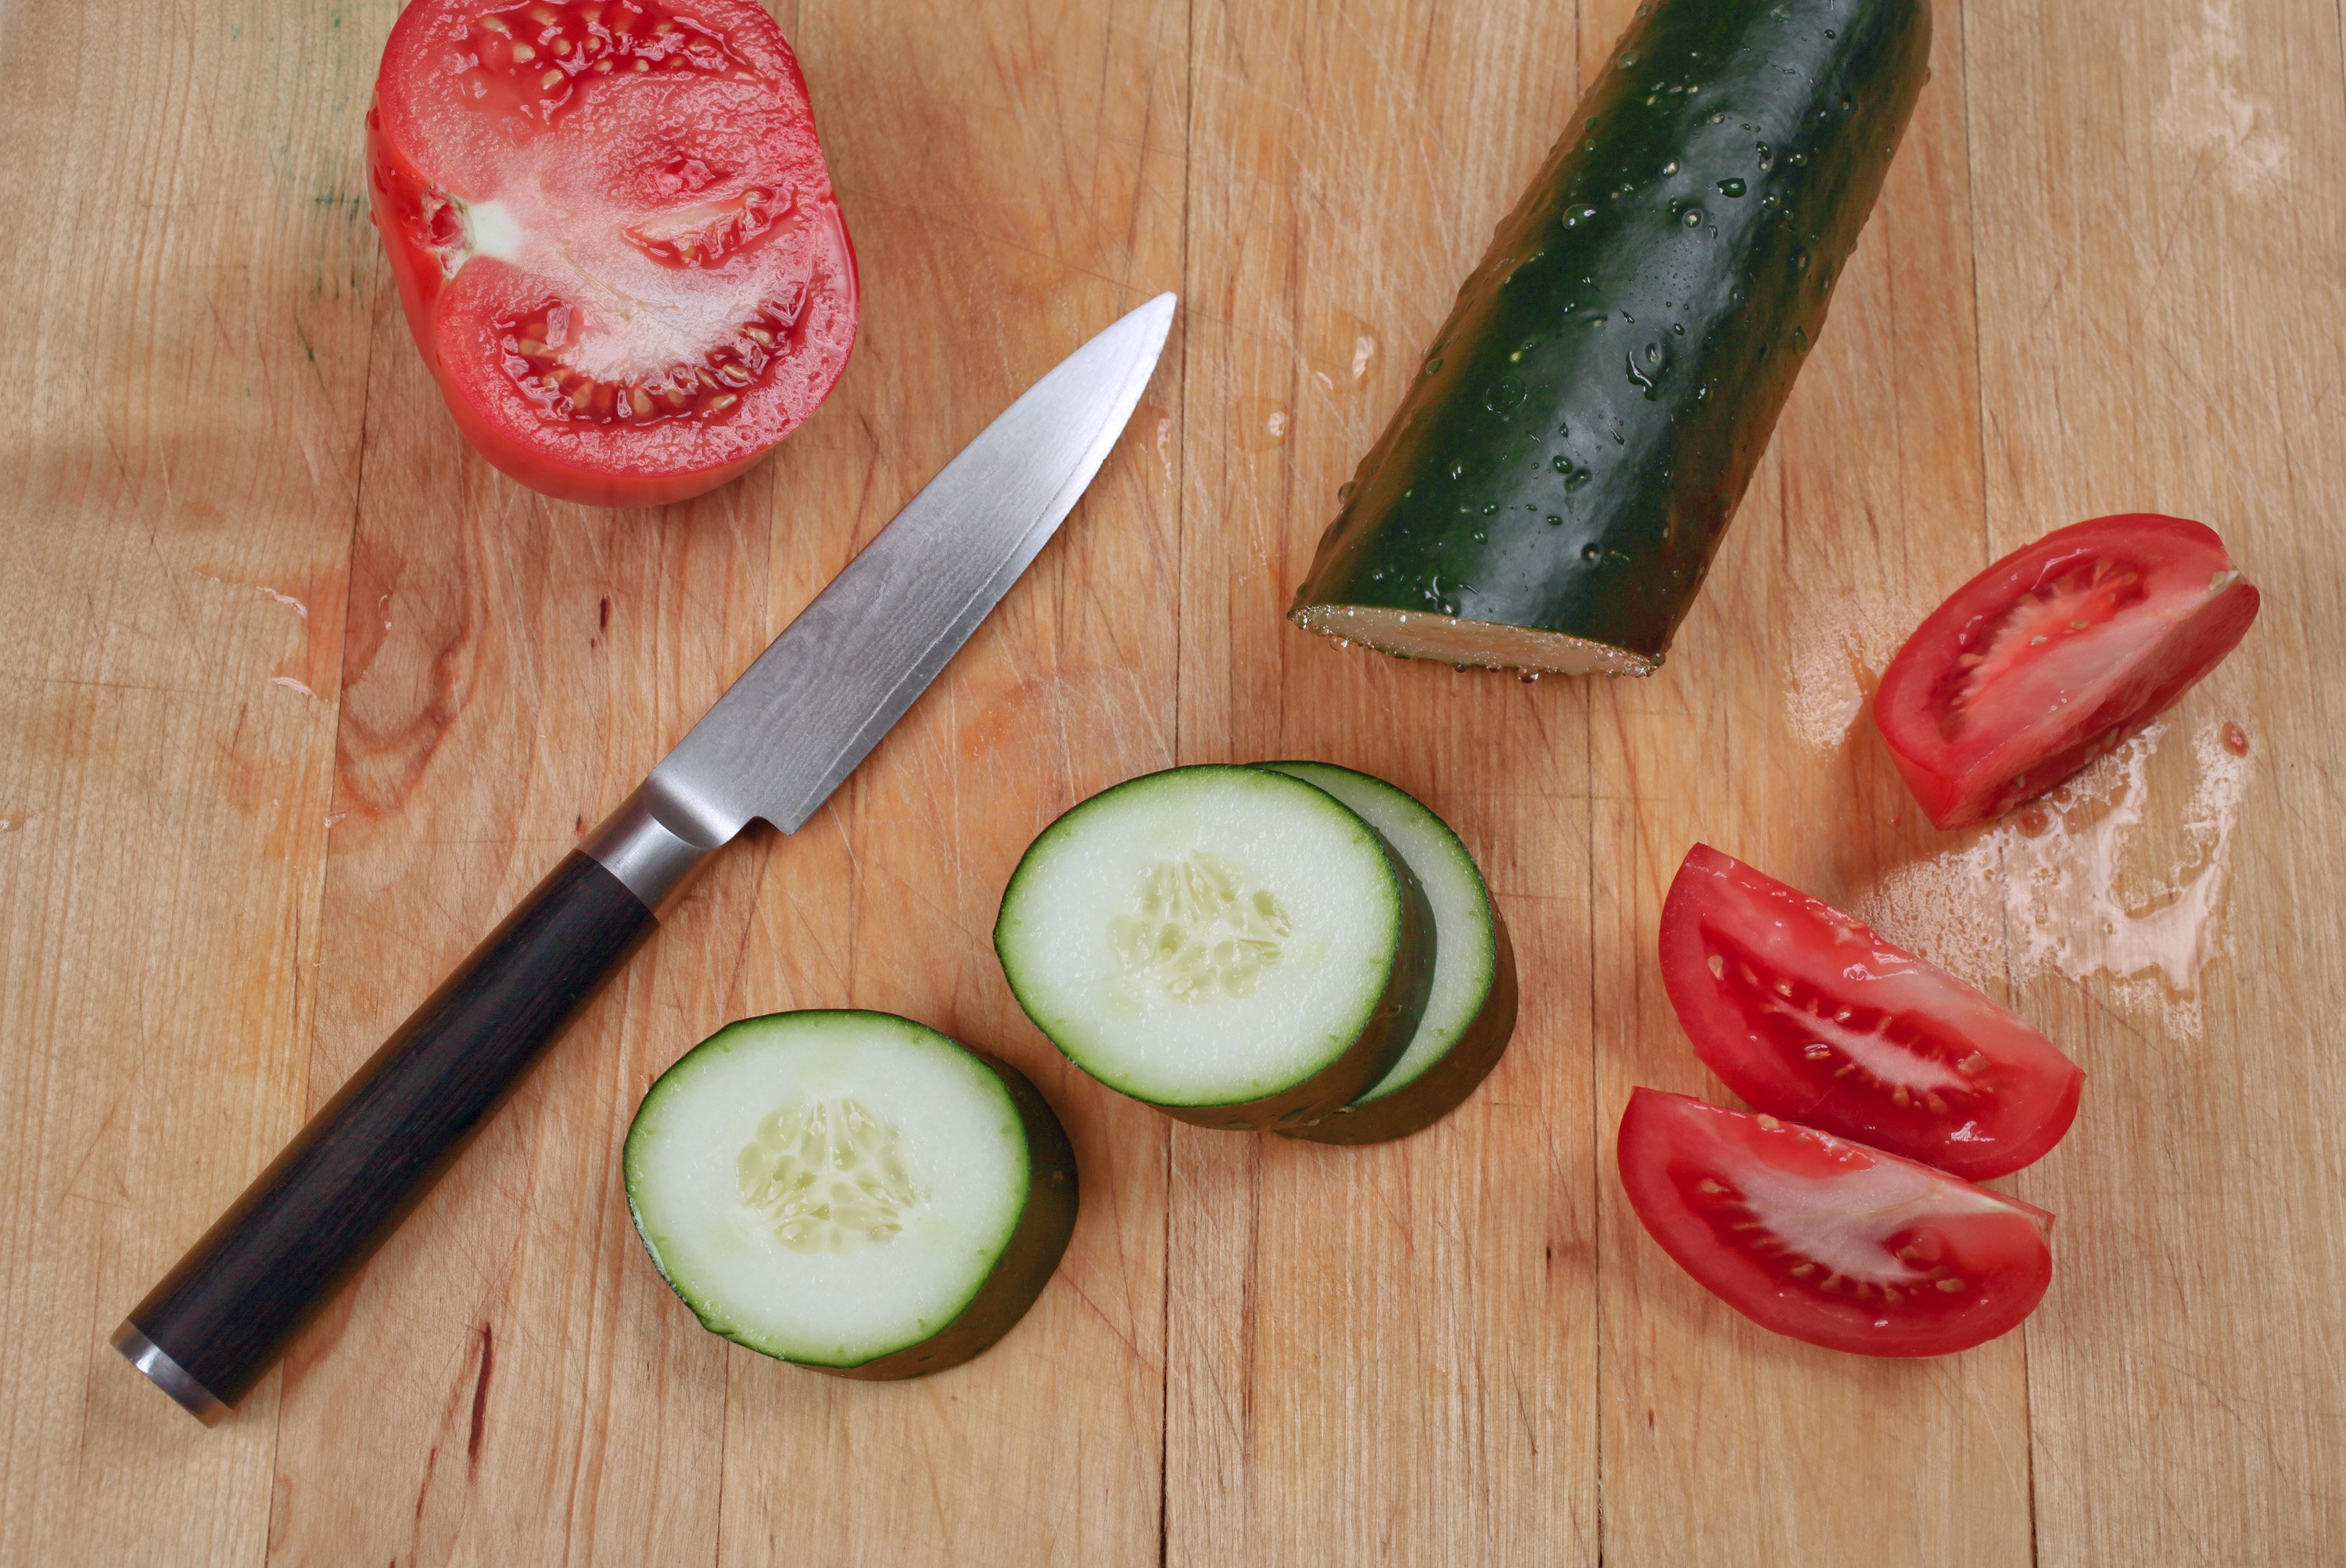 Нож режет овощи. Нарезание овощей. Нарезанные овощи. Порезанные овощи. Нарезанные огурцы и помидоры.